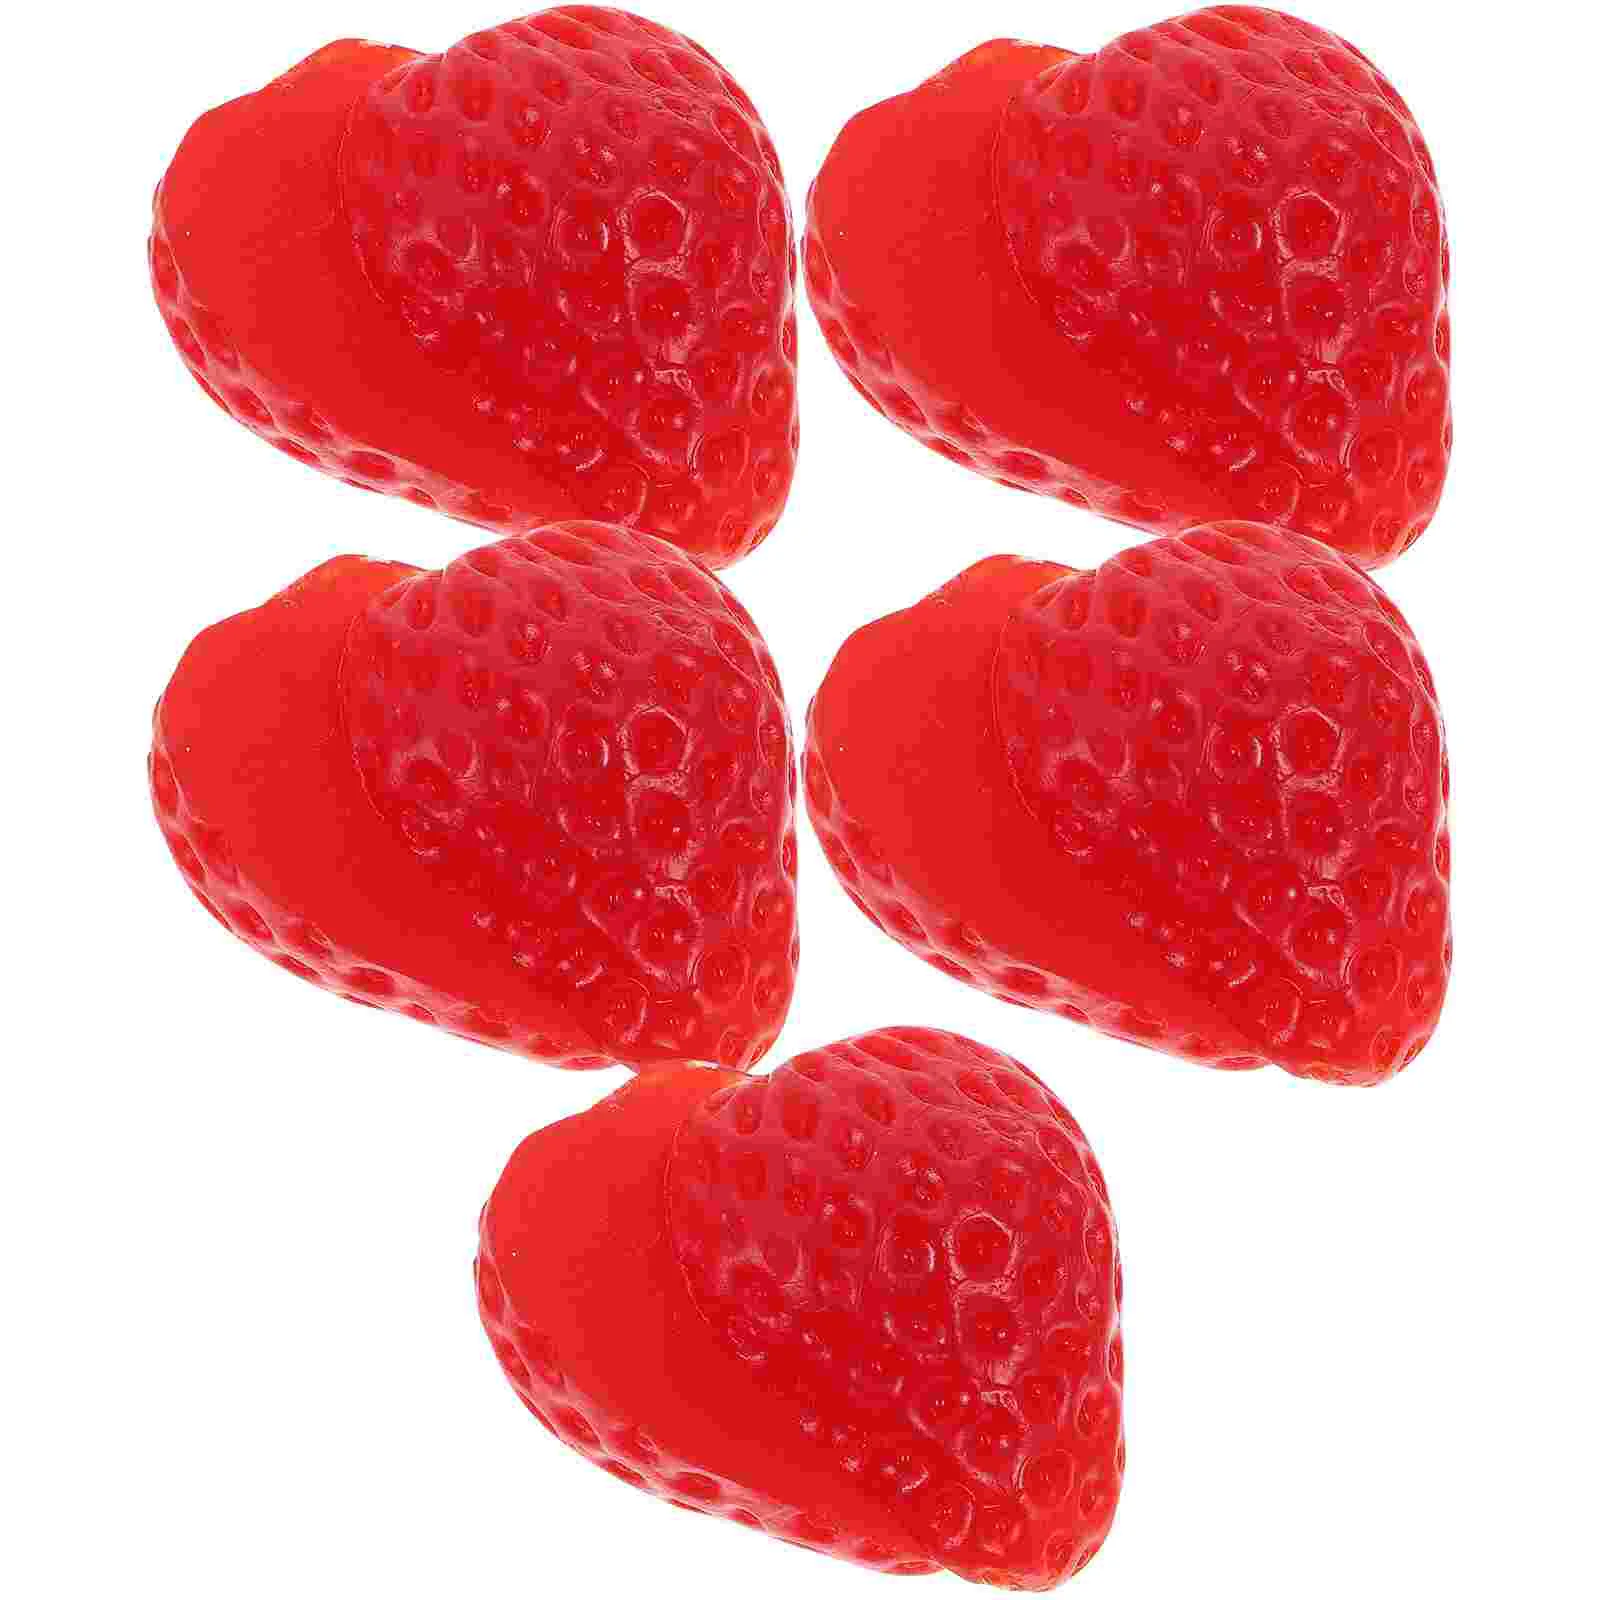 

10 Pcs Fake Strawberries Artificial Fruits Decoration Cantaloupe Faux Strawberry Models Pvc Slice Simulation Photography